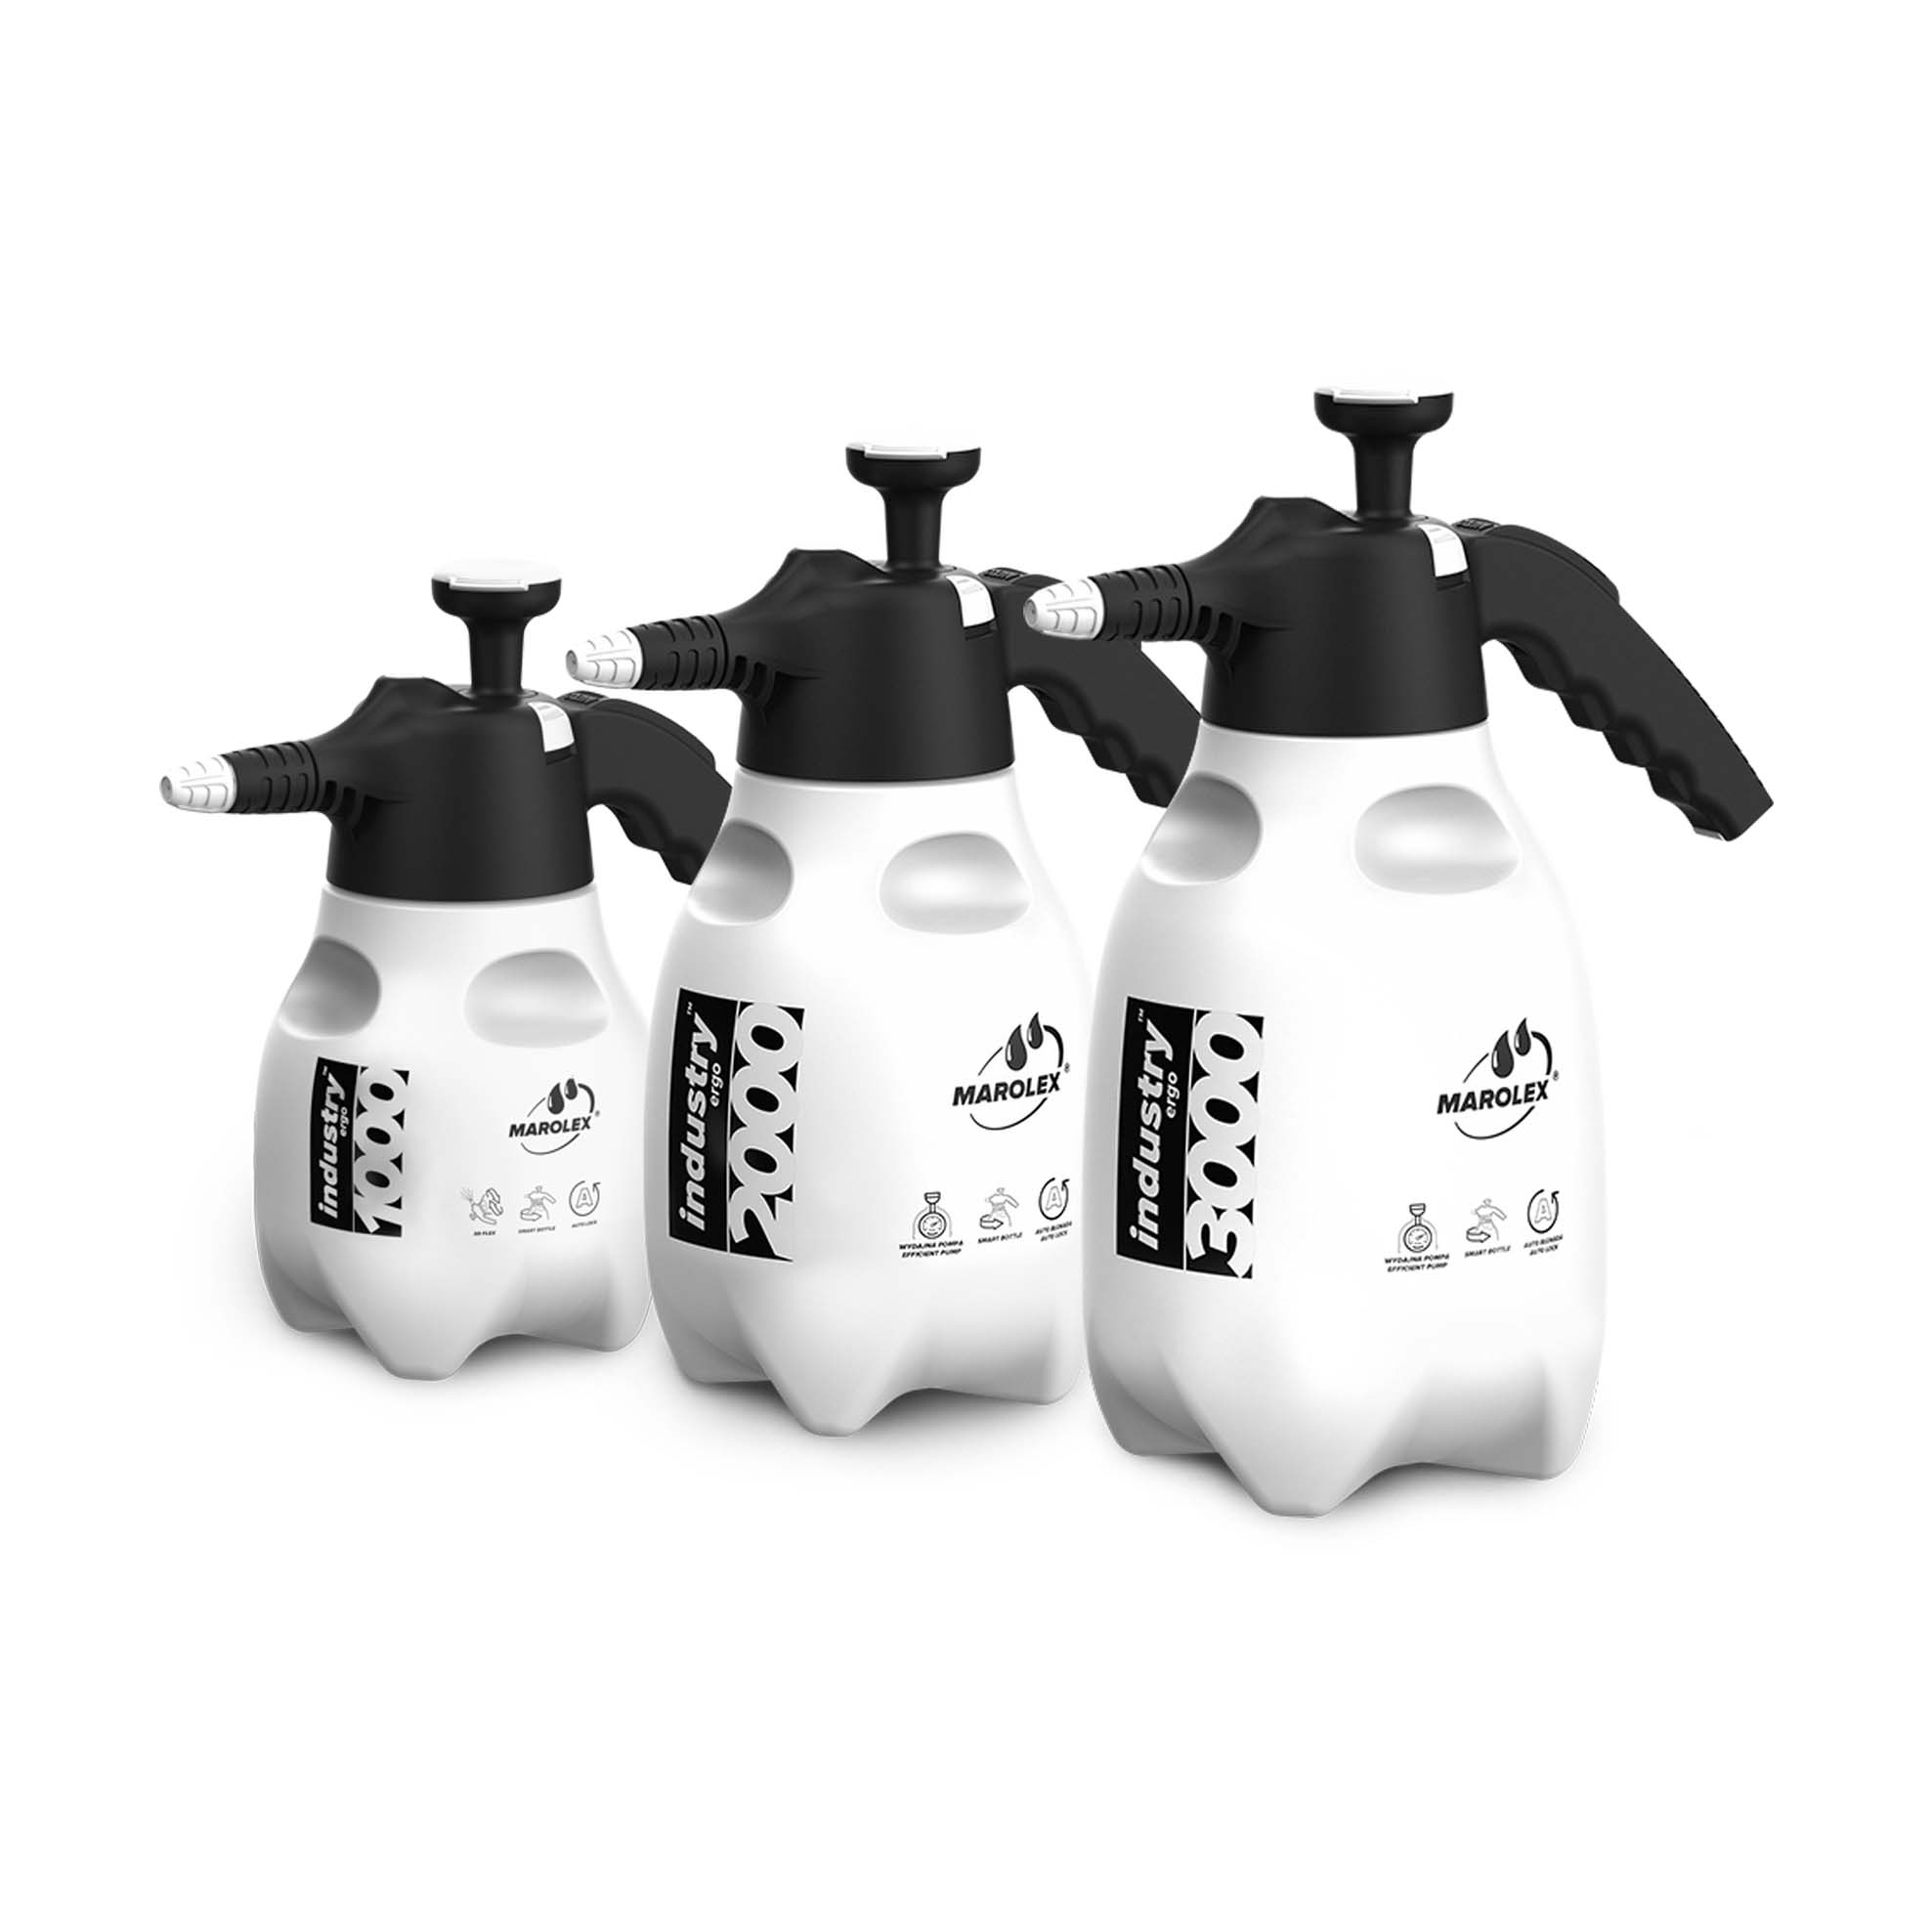 Marolex Industry Ergo | Acid Resistant Sprayer